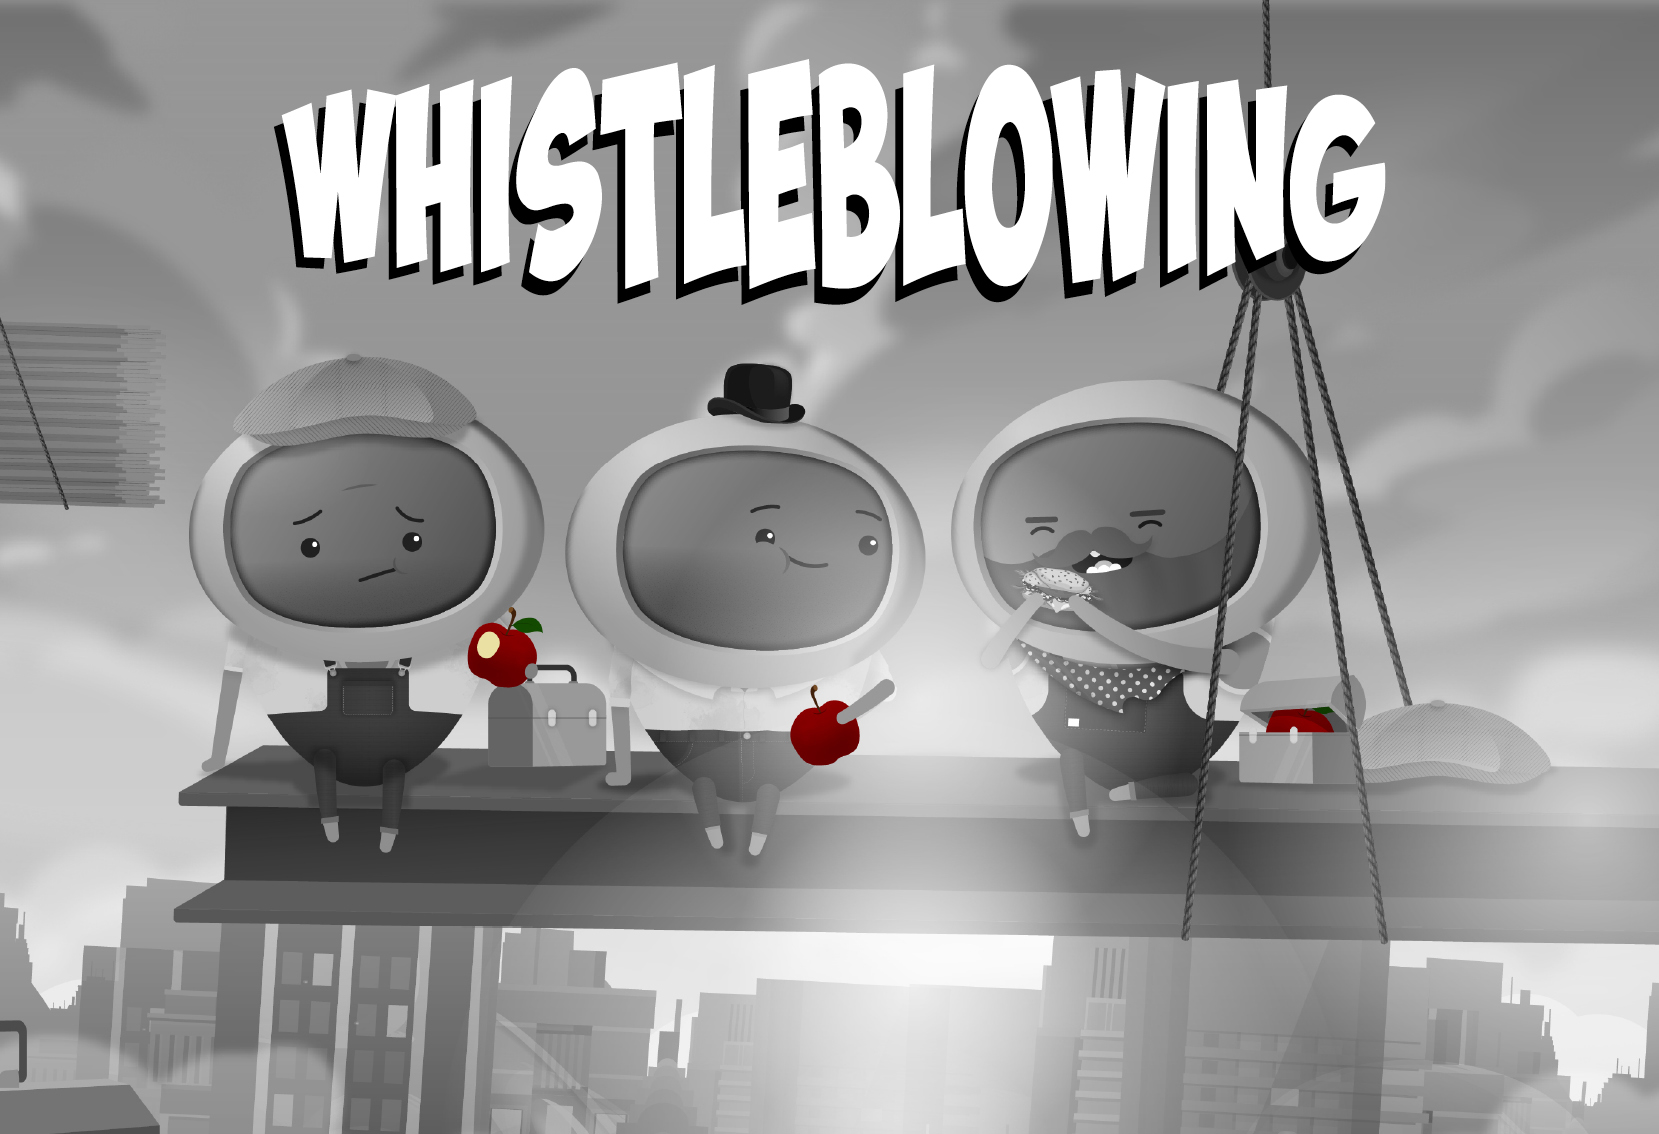 iAM 00193 - Whistleblowing - LMS Thumbnails (1)